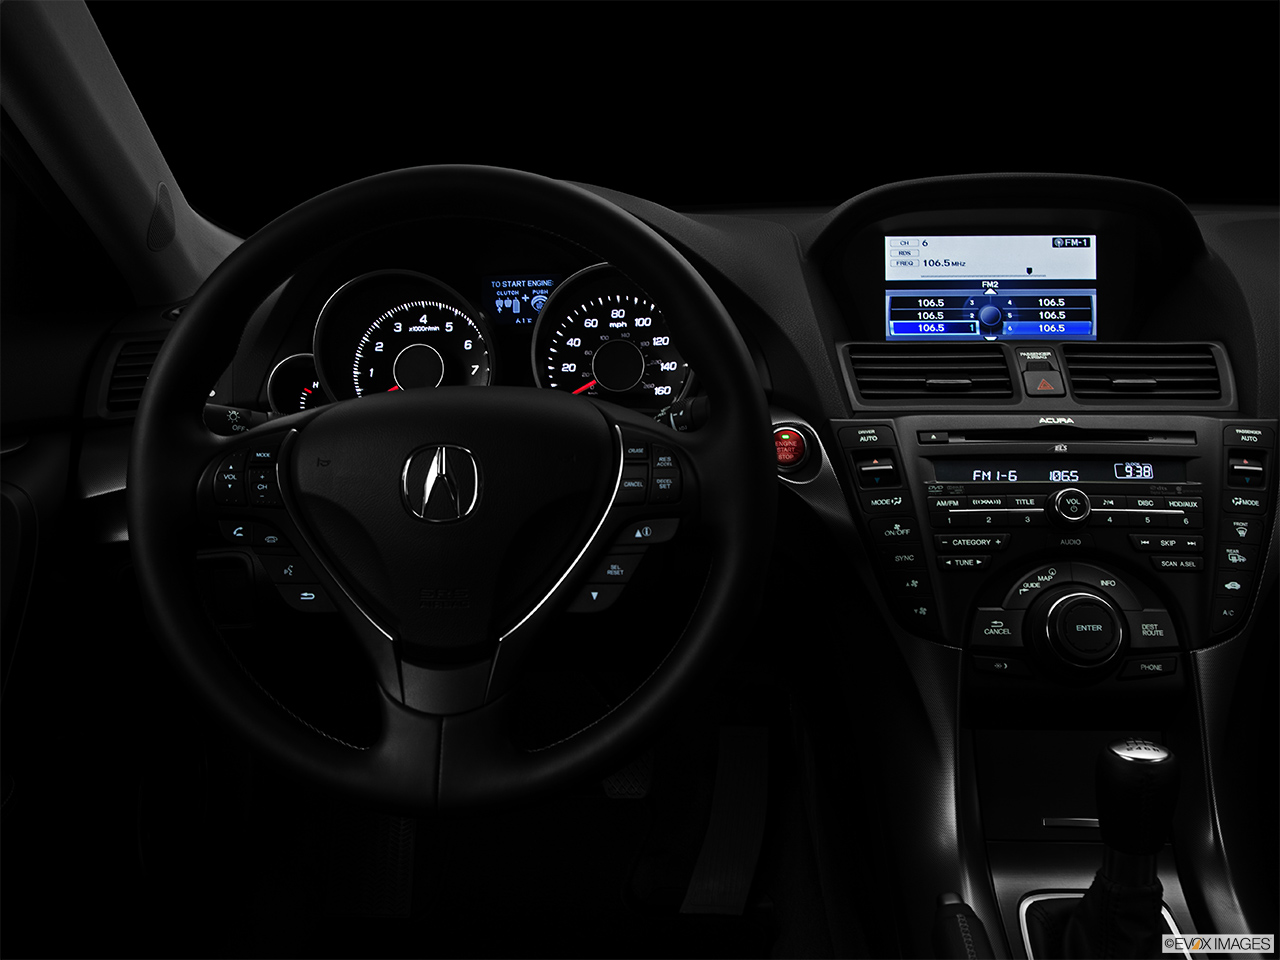 2013 Acura TL SH-AWD Centered wide dash shot - "night" shot. 